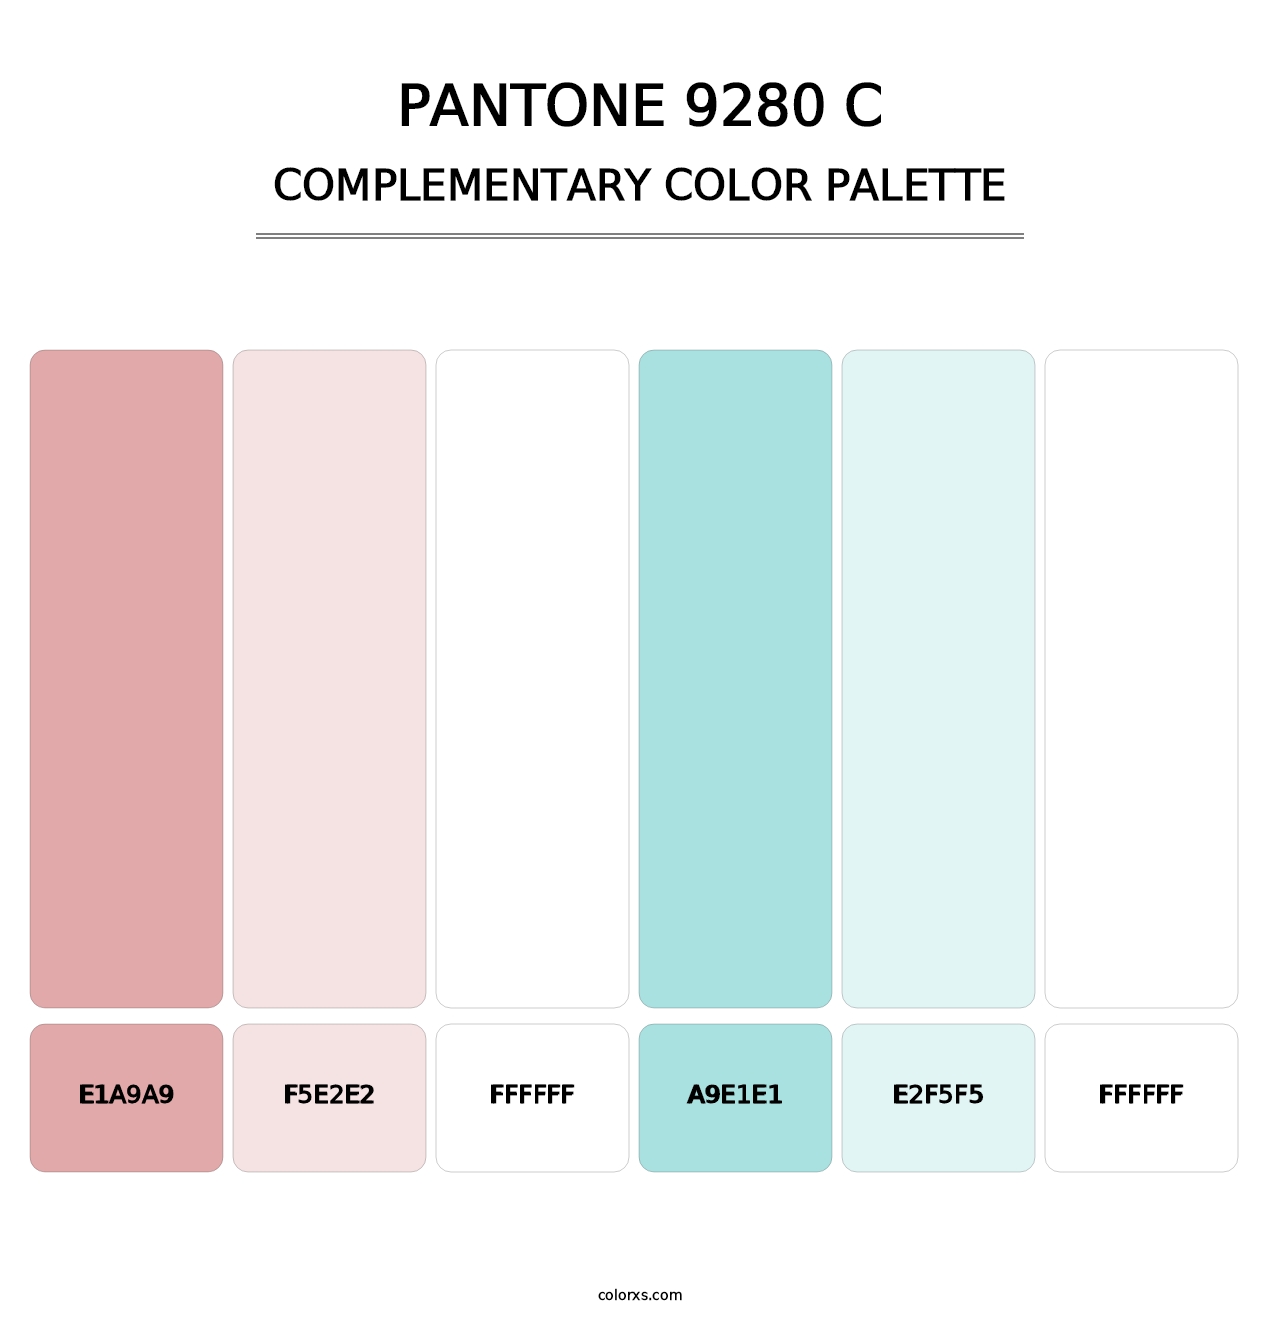 PANTONE 9280 C - Complementary Color Palette